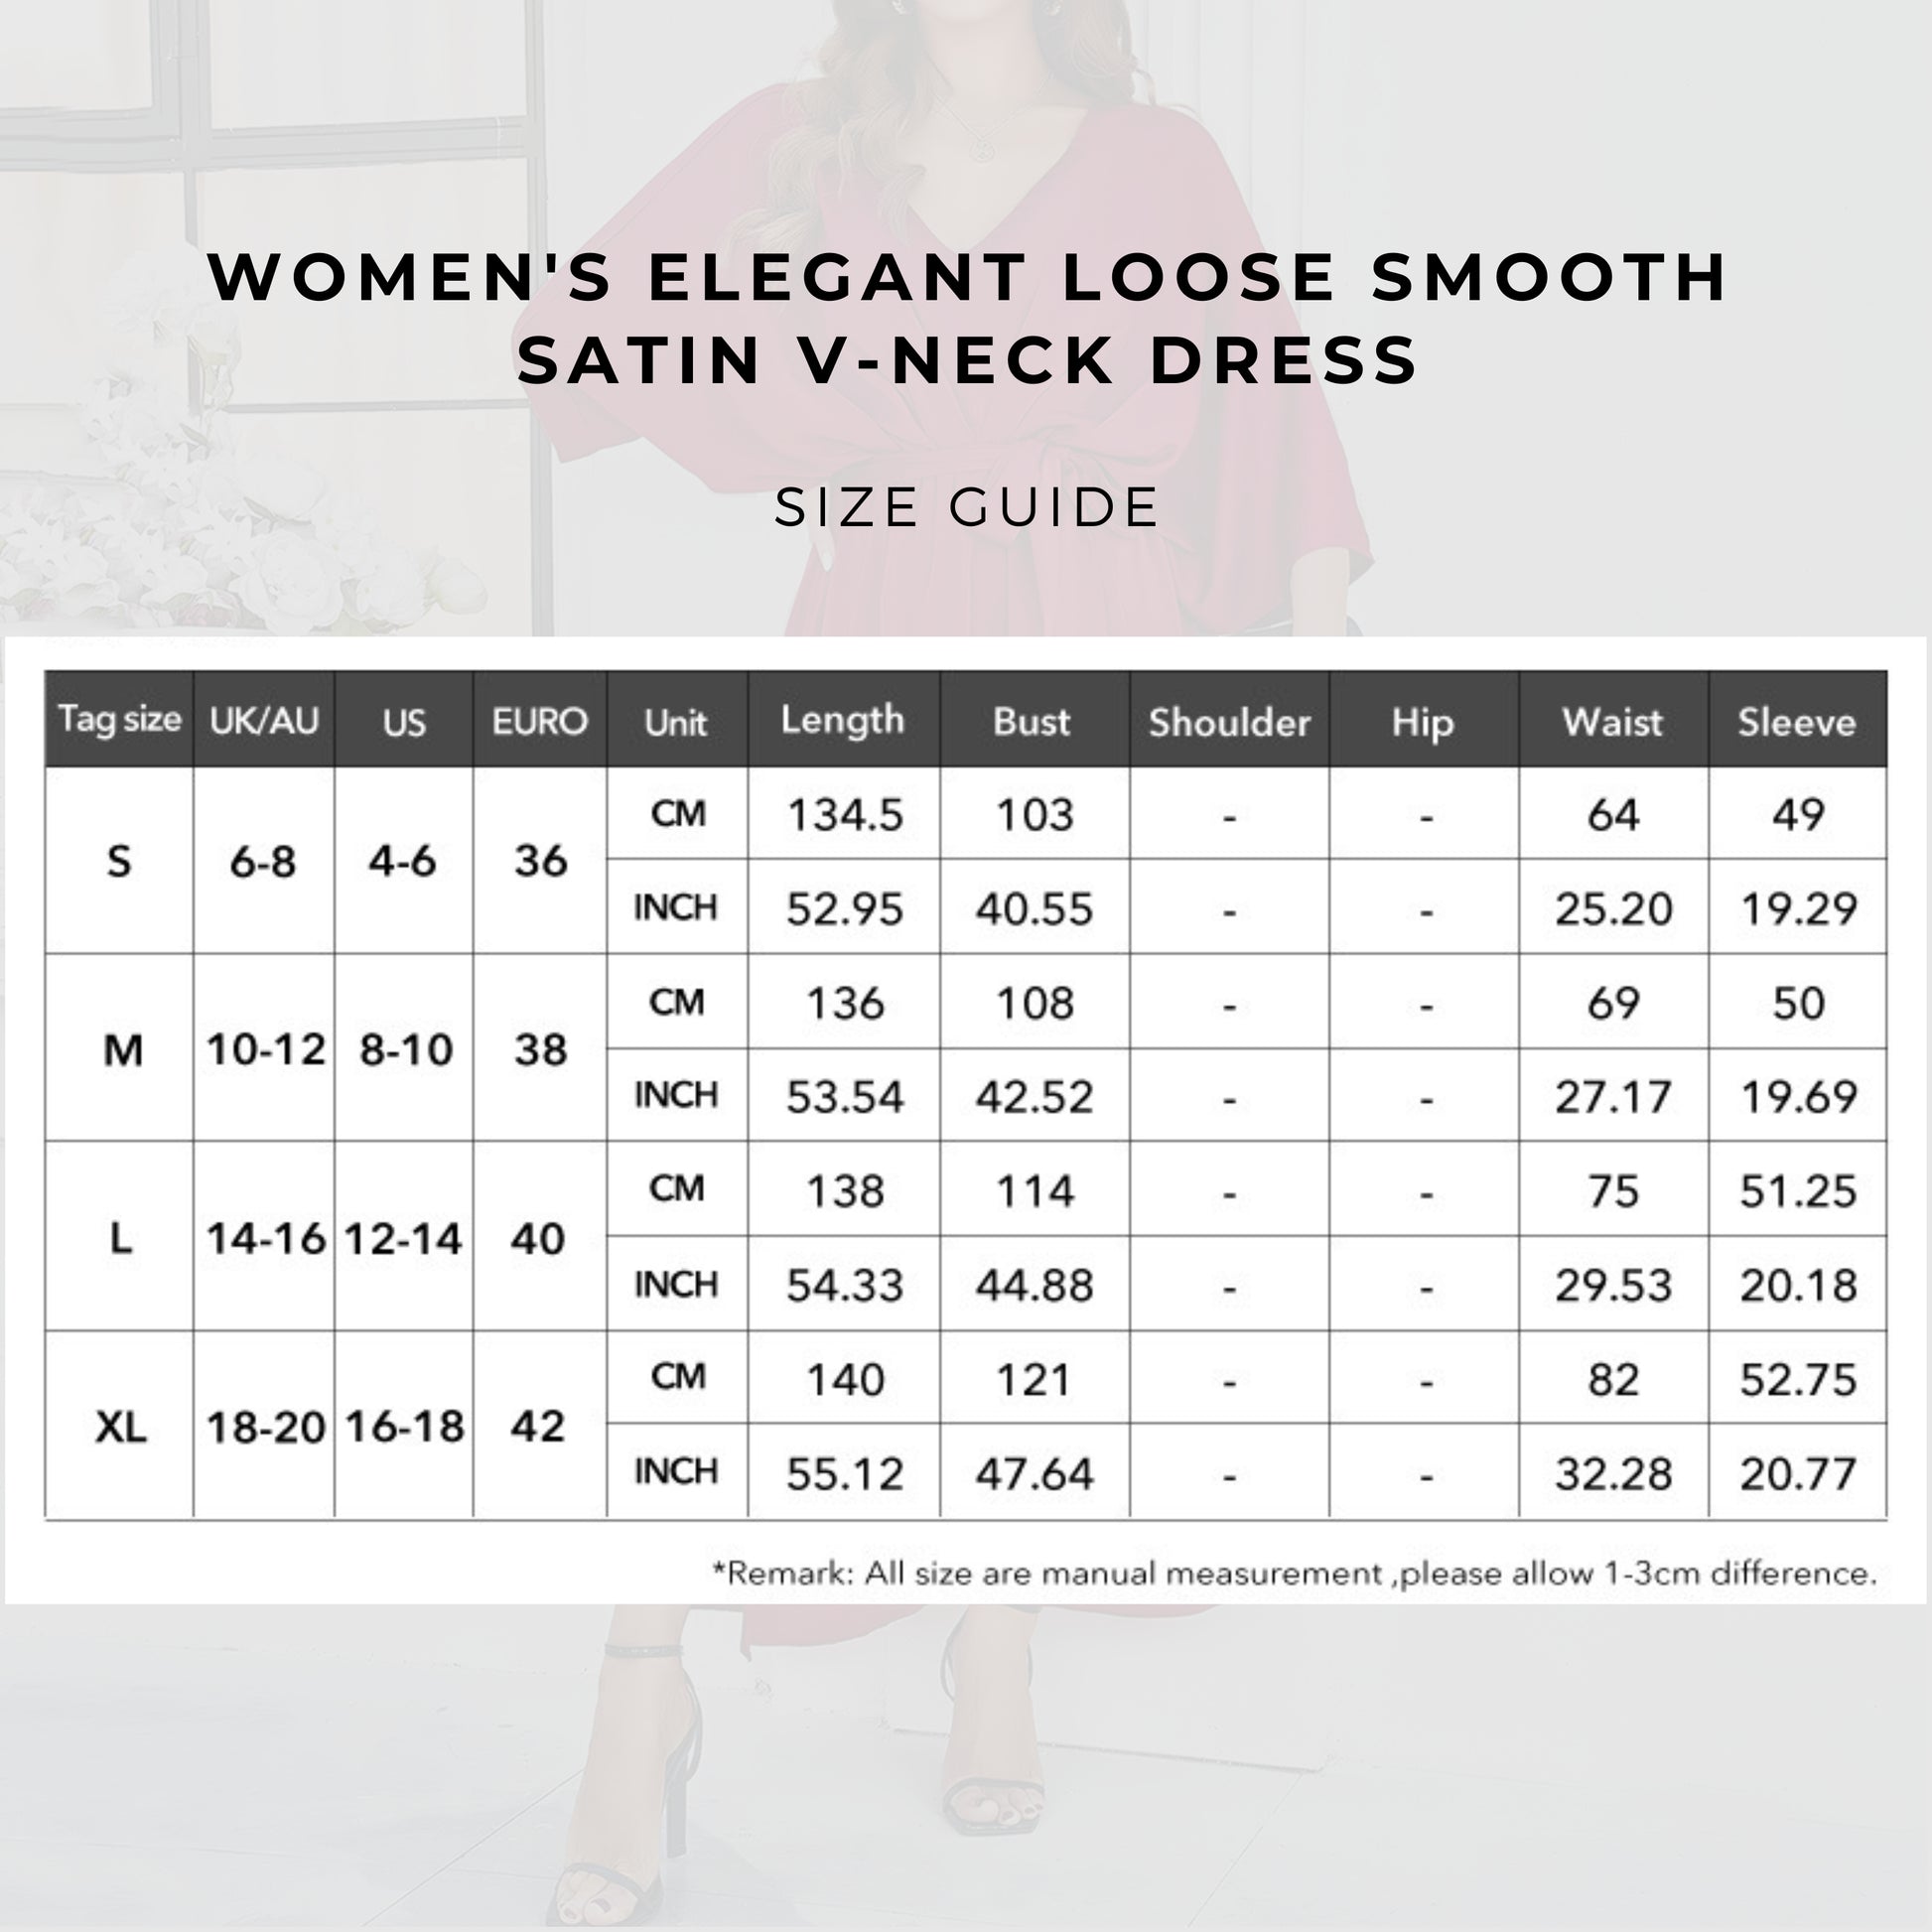 Women's Elegant Loose Smooth Satin V-neck Dress size